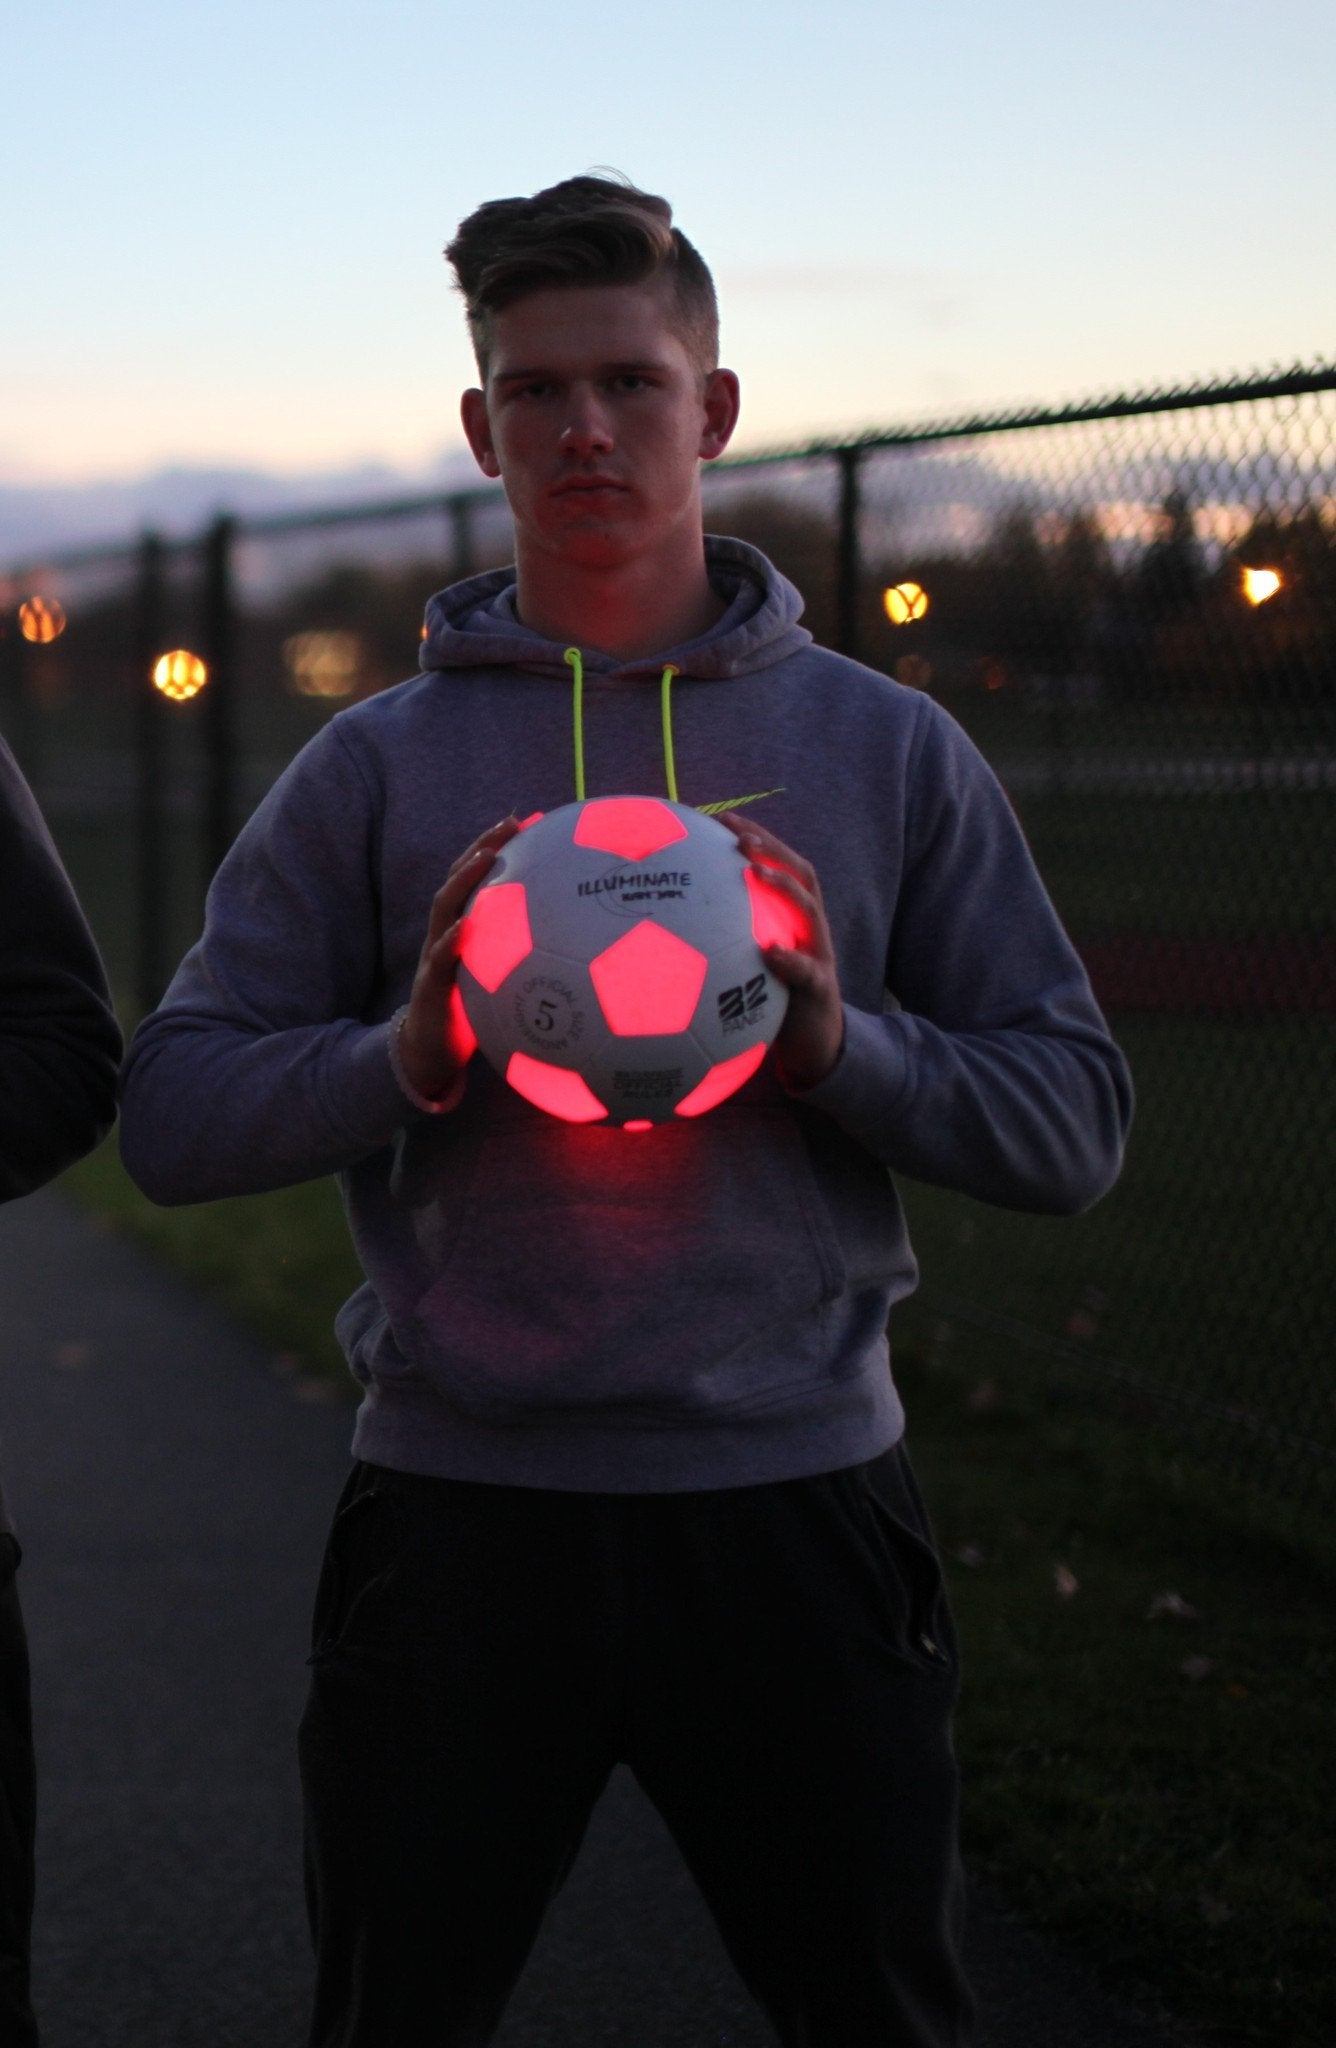 KanJam ilumina el balón de fútbol LED